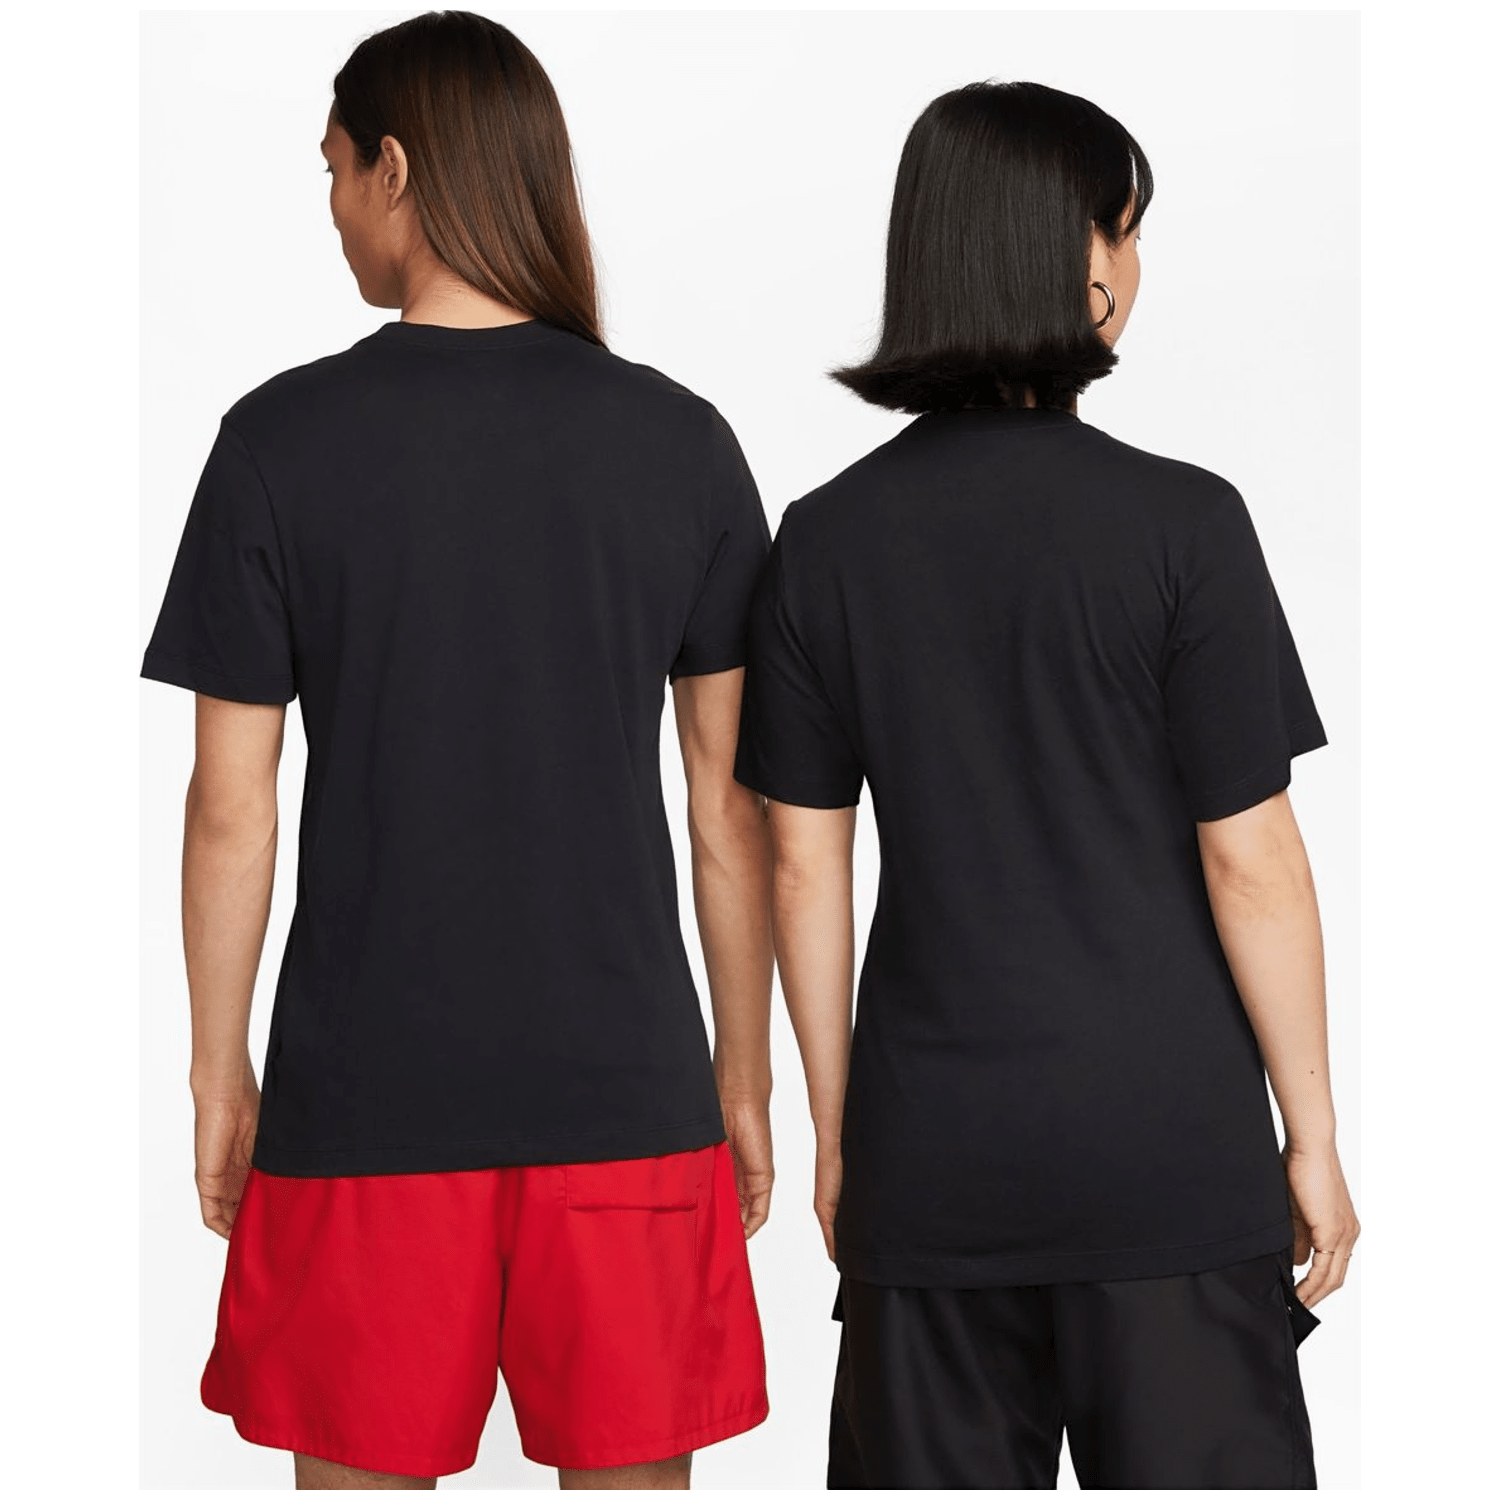 Nike Sportswear Club Herren T-Shirt